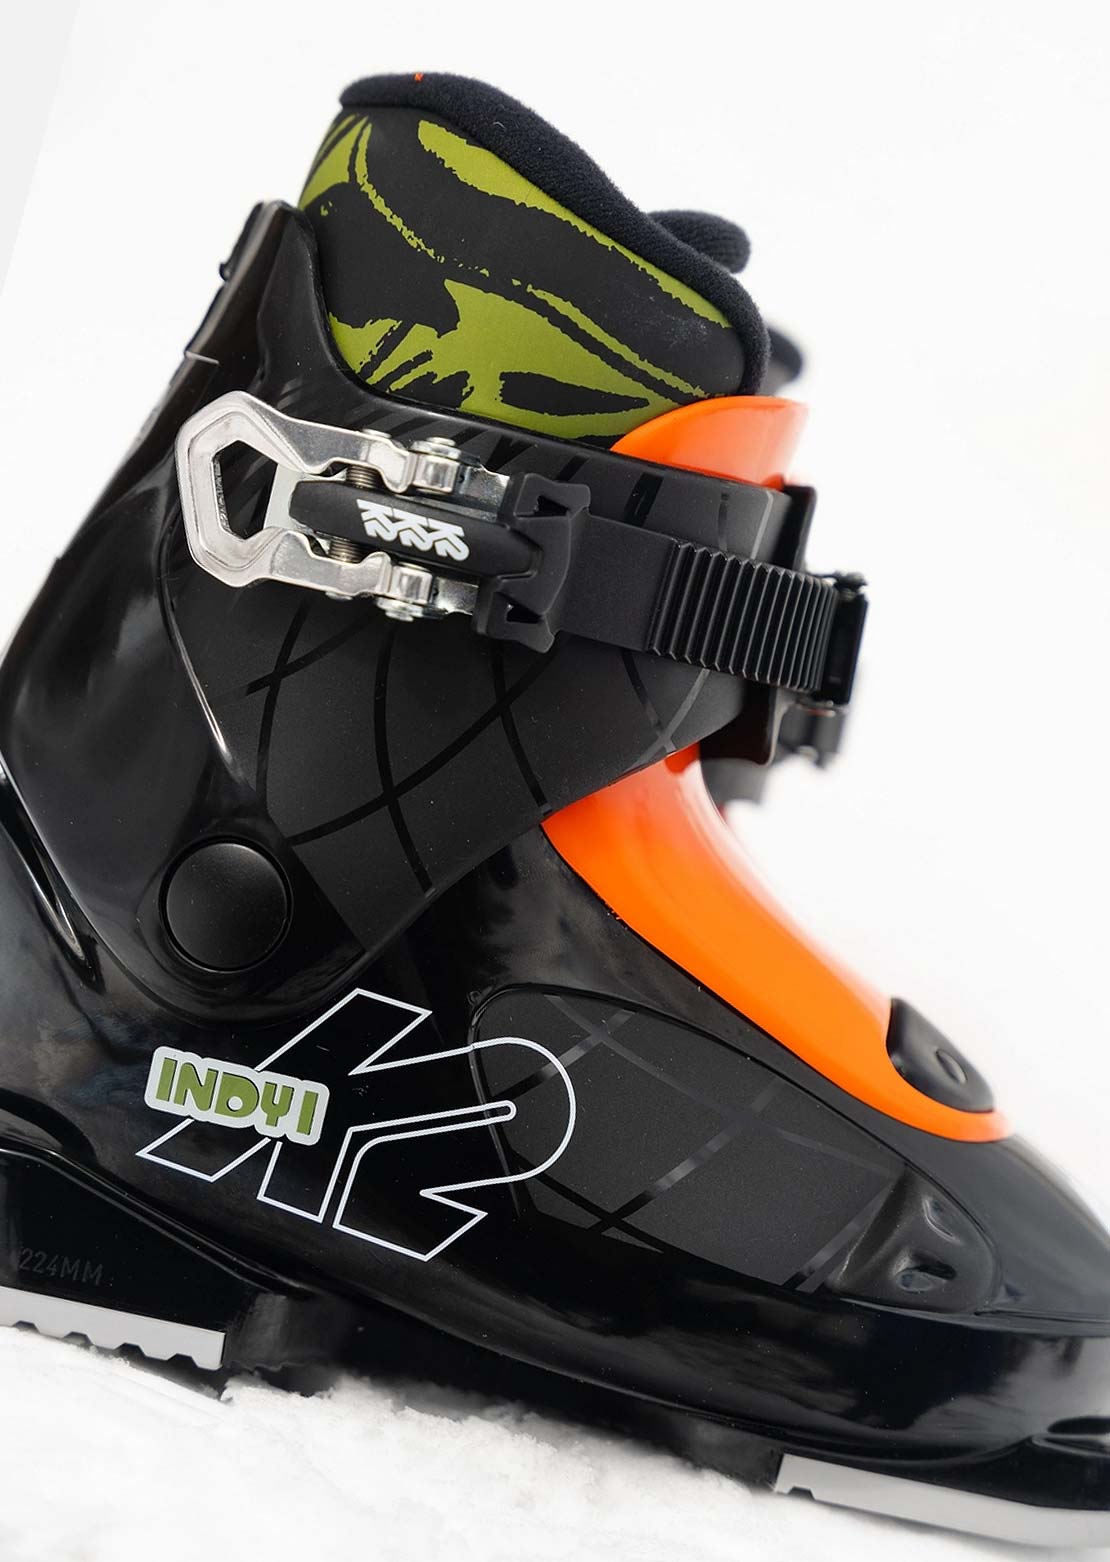 K2 Junior Indy 1 Ski Boots